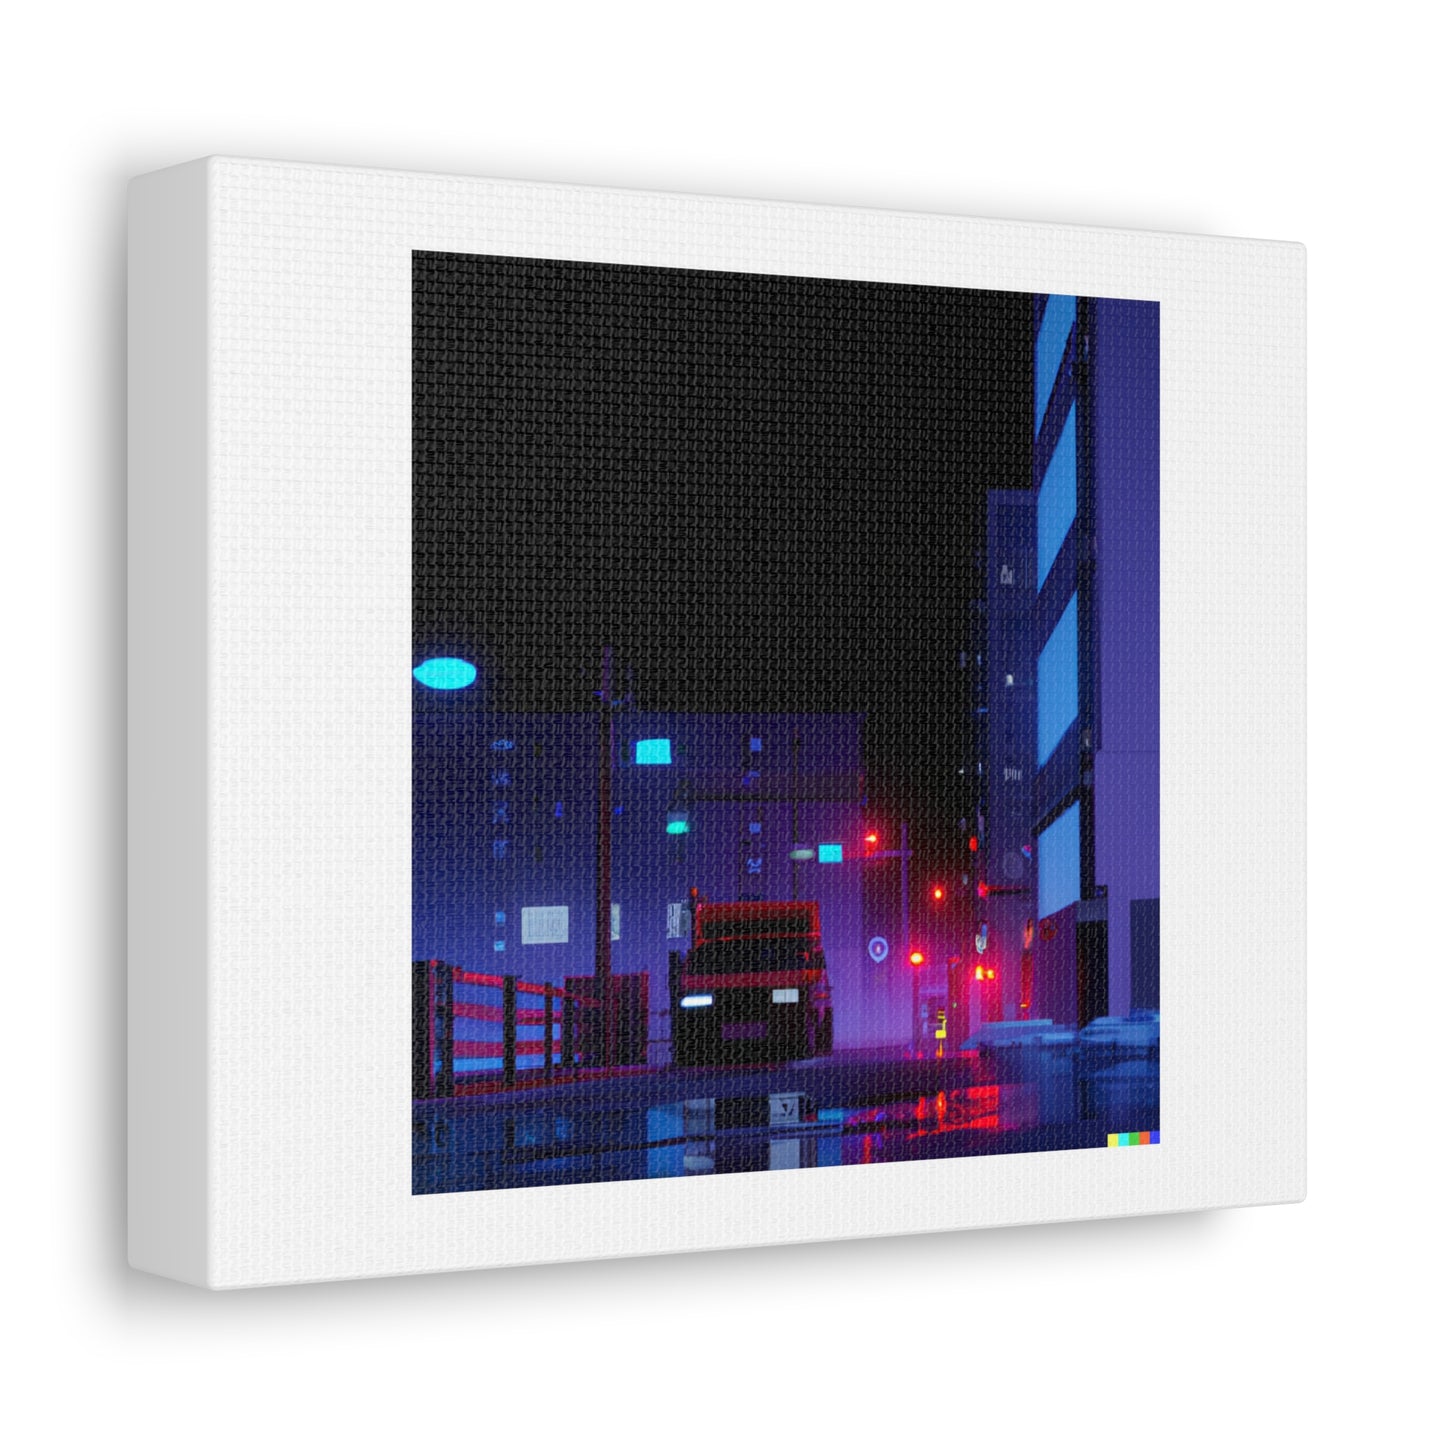 Cyberpunk Style City Street At Night, Unreal Engine 5 digital art 'Designed by AI' on Canvas